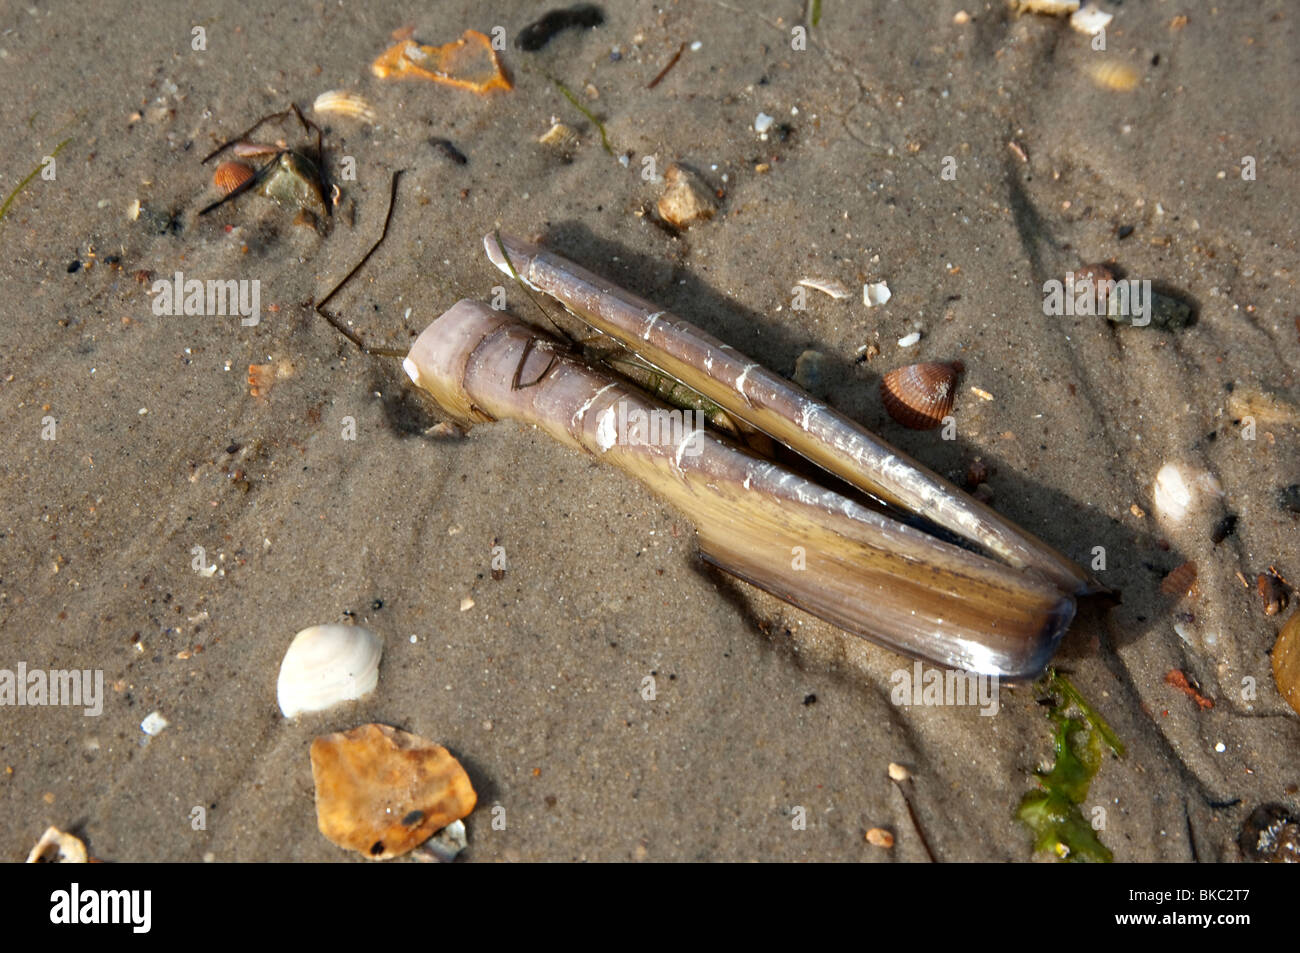 Atlantic Jackknife Clam (Ensis directus), shells on beach sand. Stock Photo